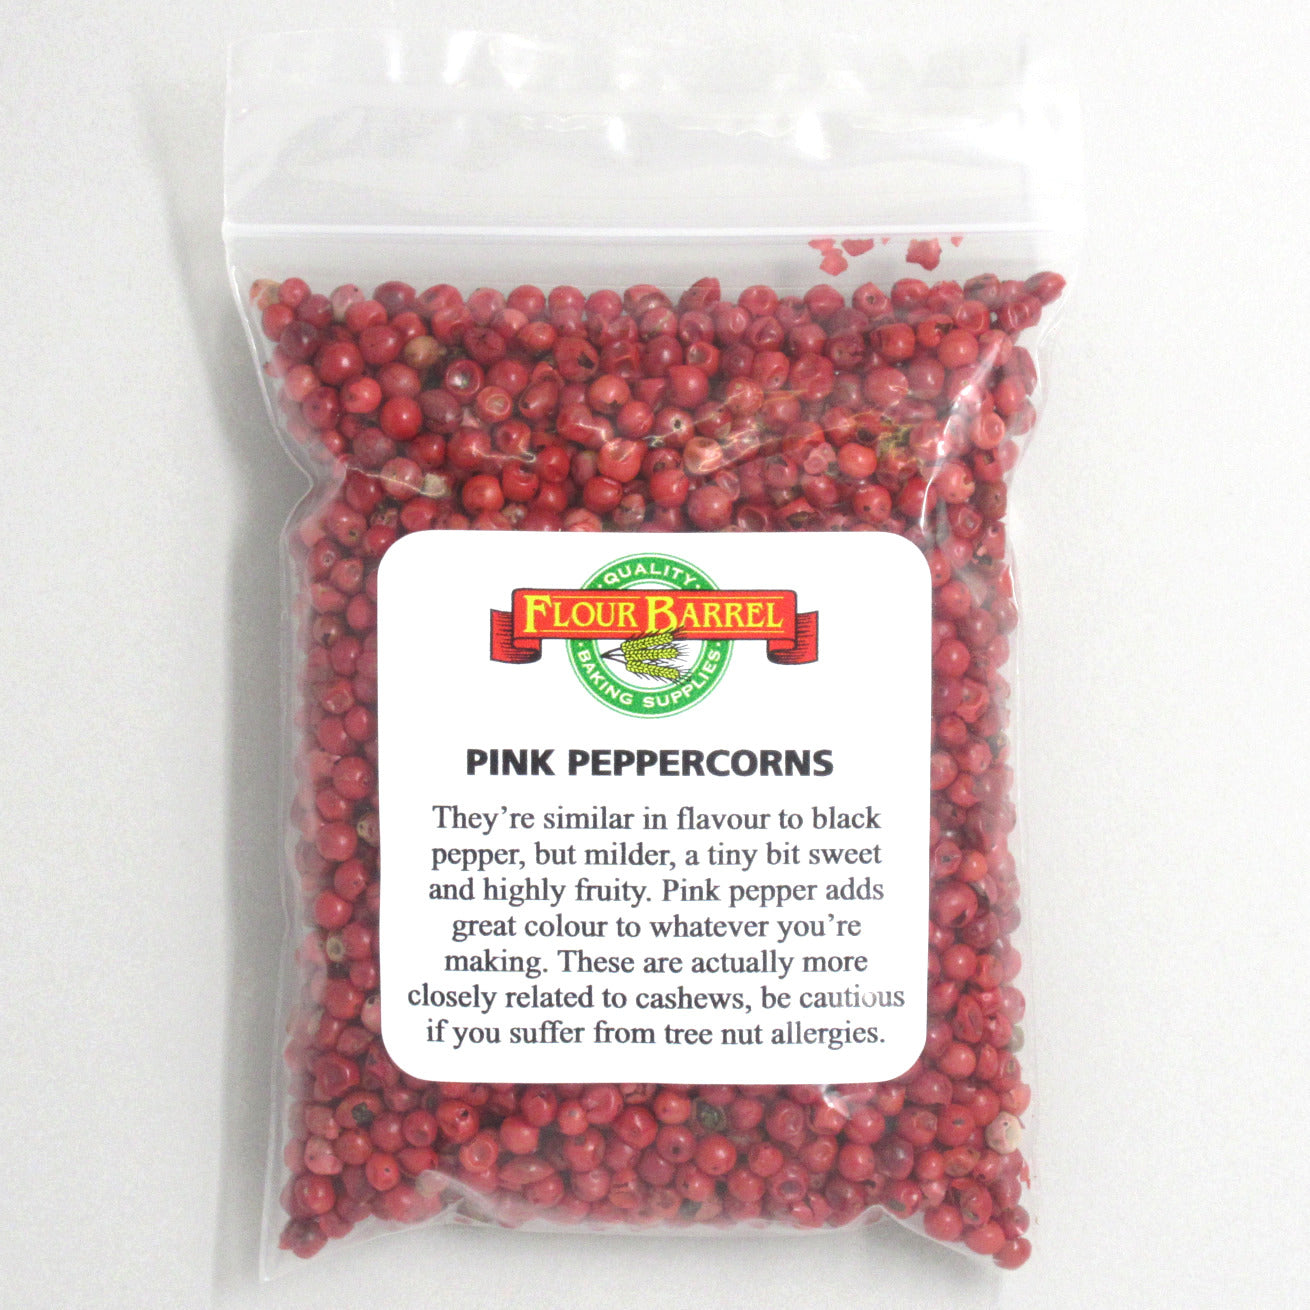 Flour Barrel product image - Pink Peppercorns